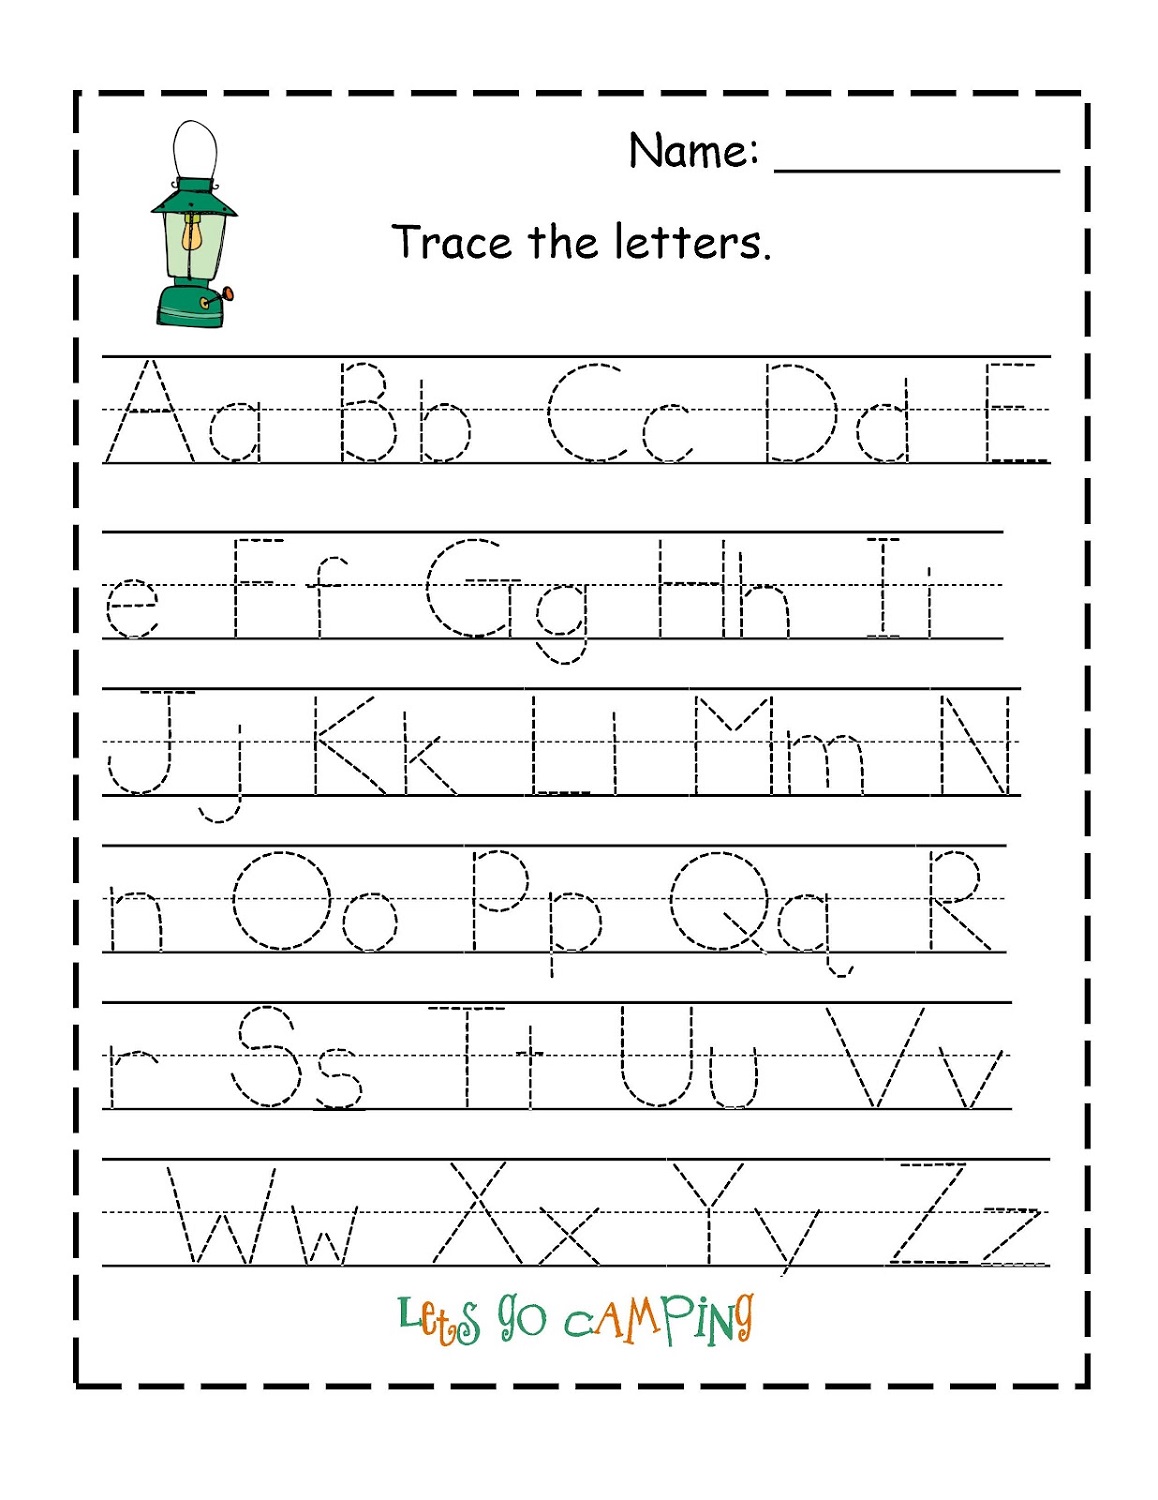 traceable alphabet worksheets a-z for kids